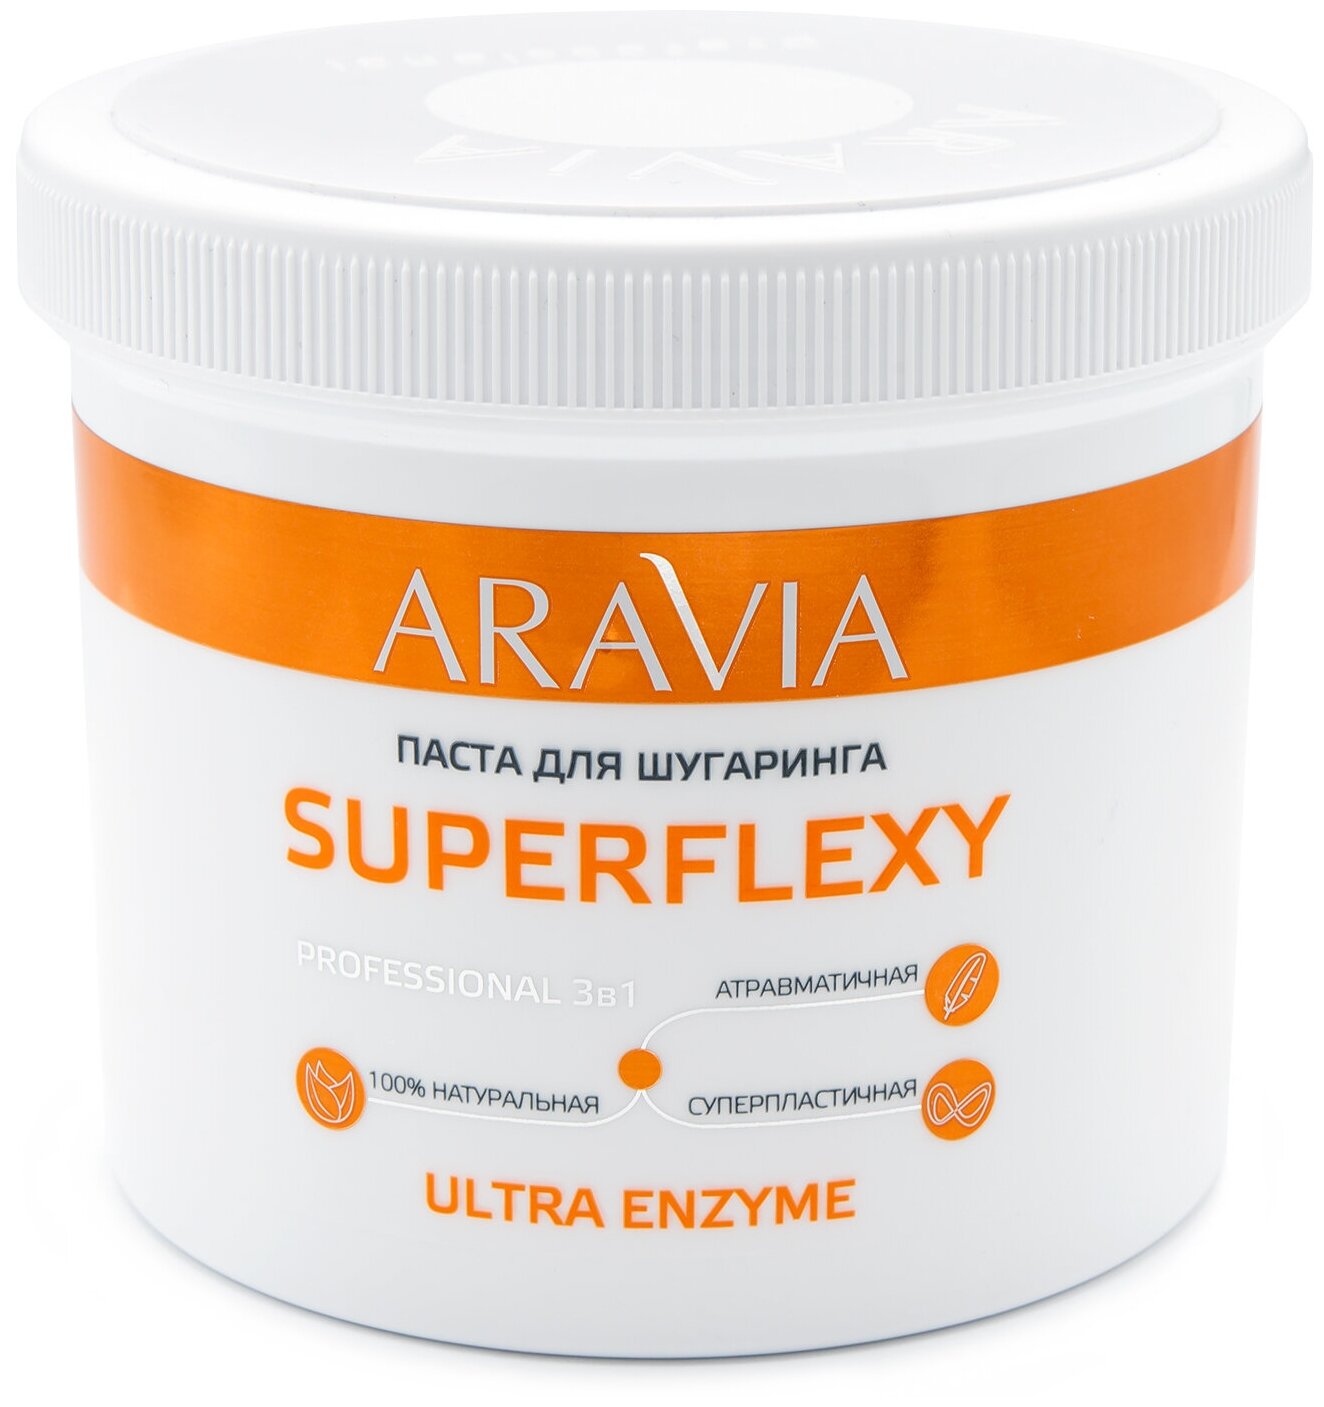      Aravia Superflexy Ultra Enzyme 750 